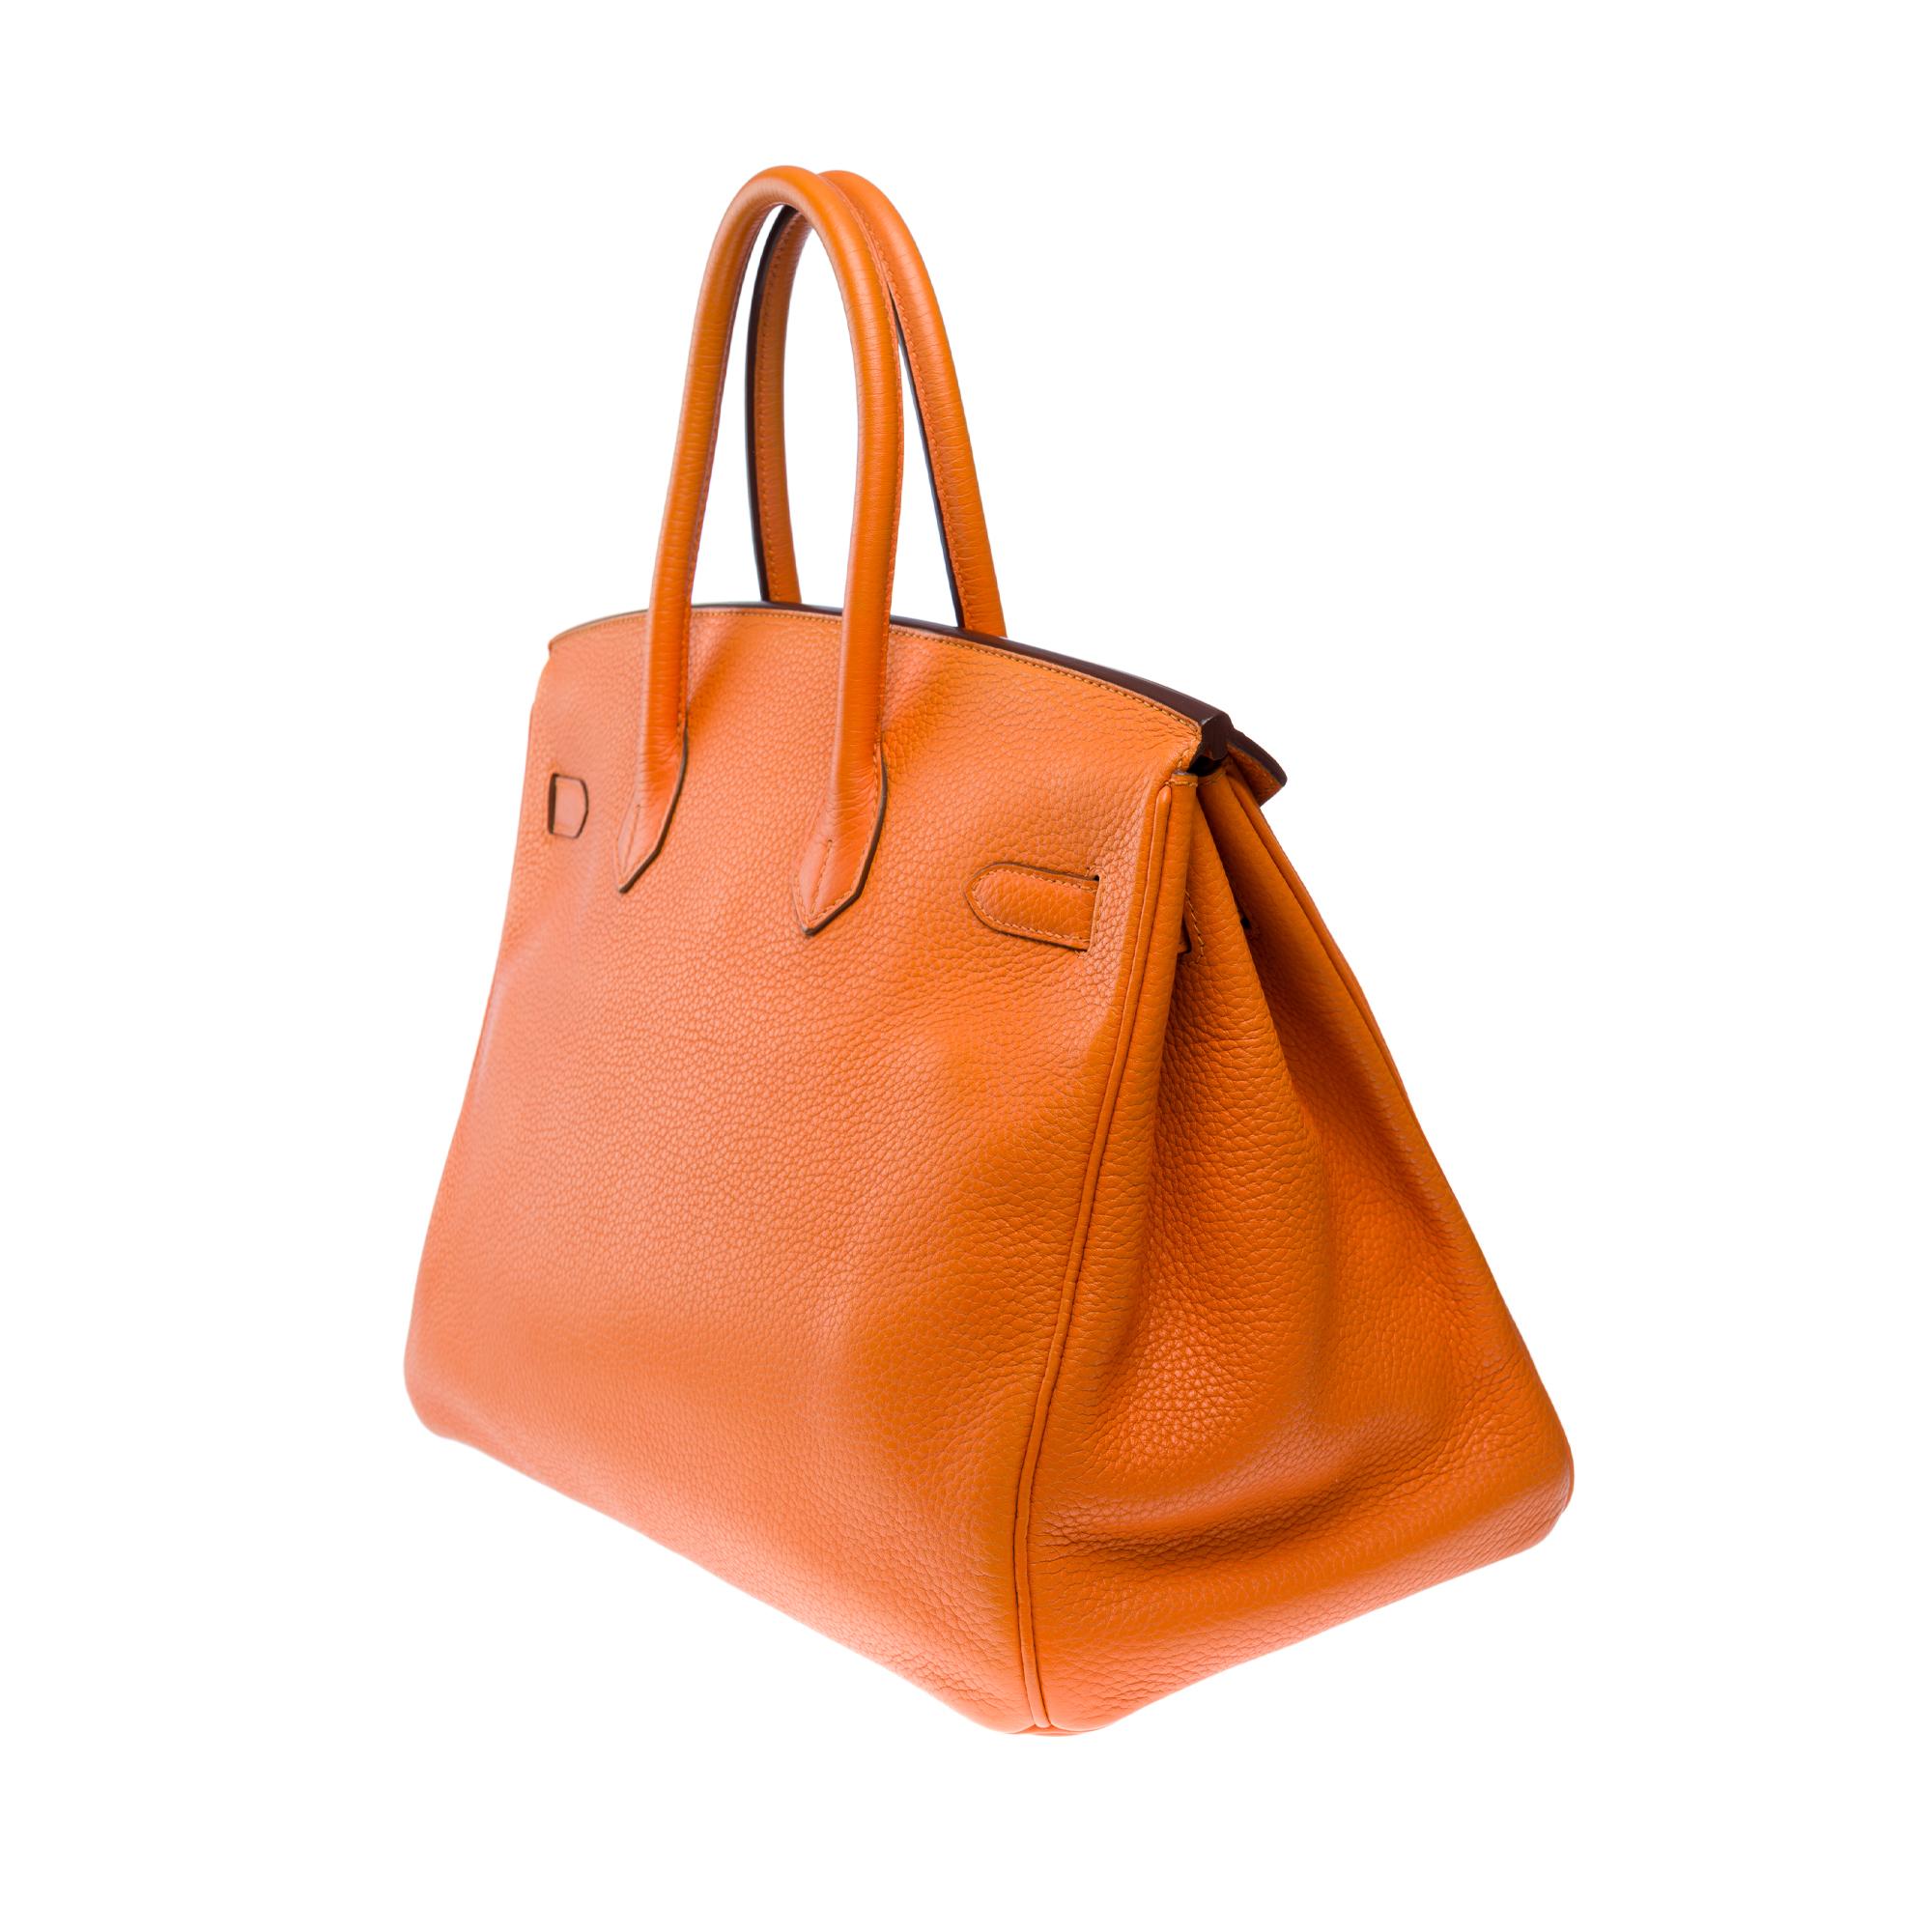 Amazing Hermès Birkin 35 handbag in Orange Togo Calf leather, GHW 1